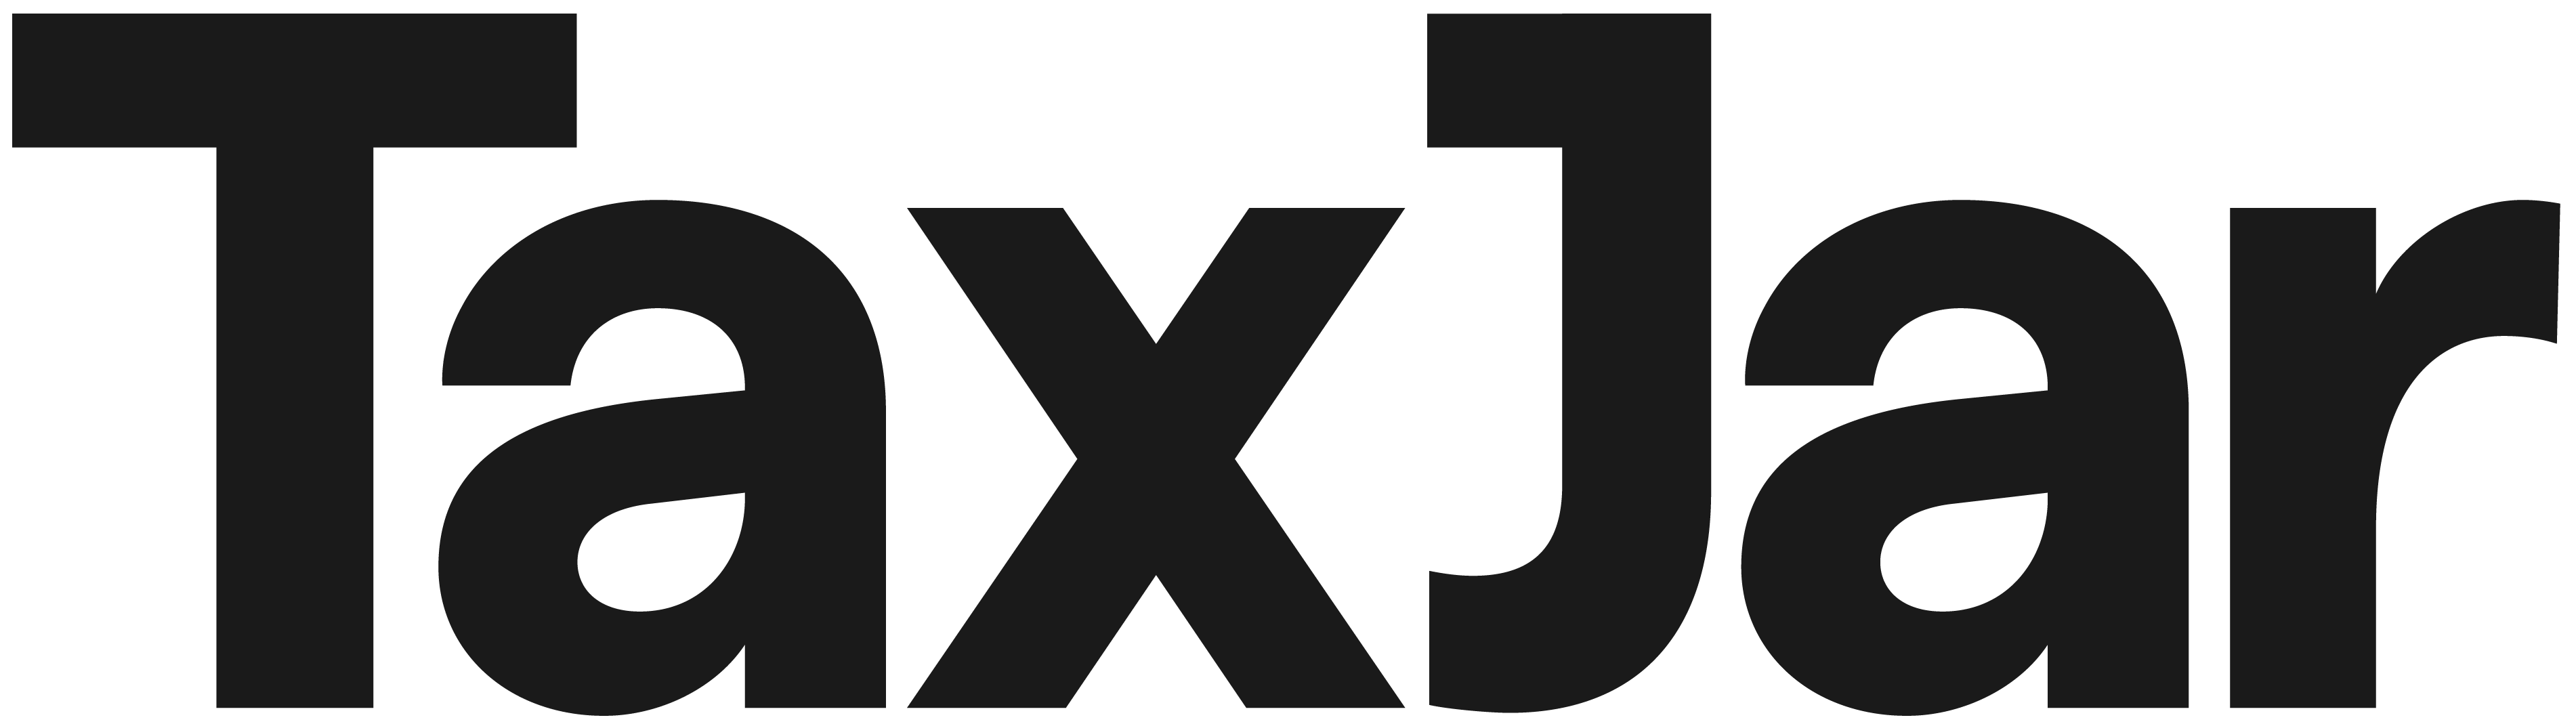 TaxJar logo.